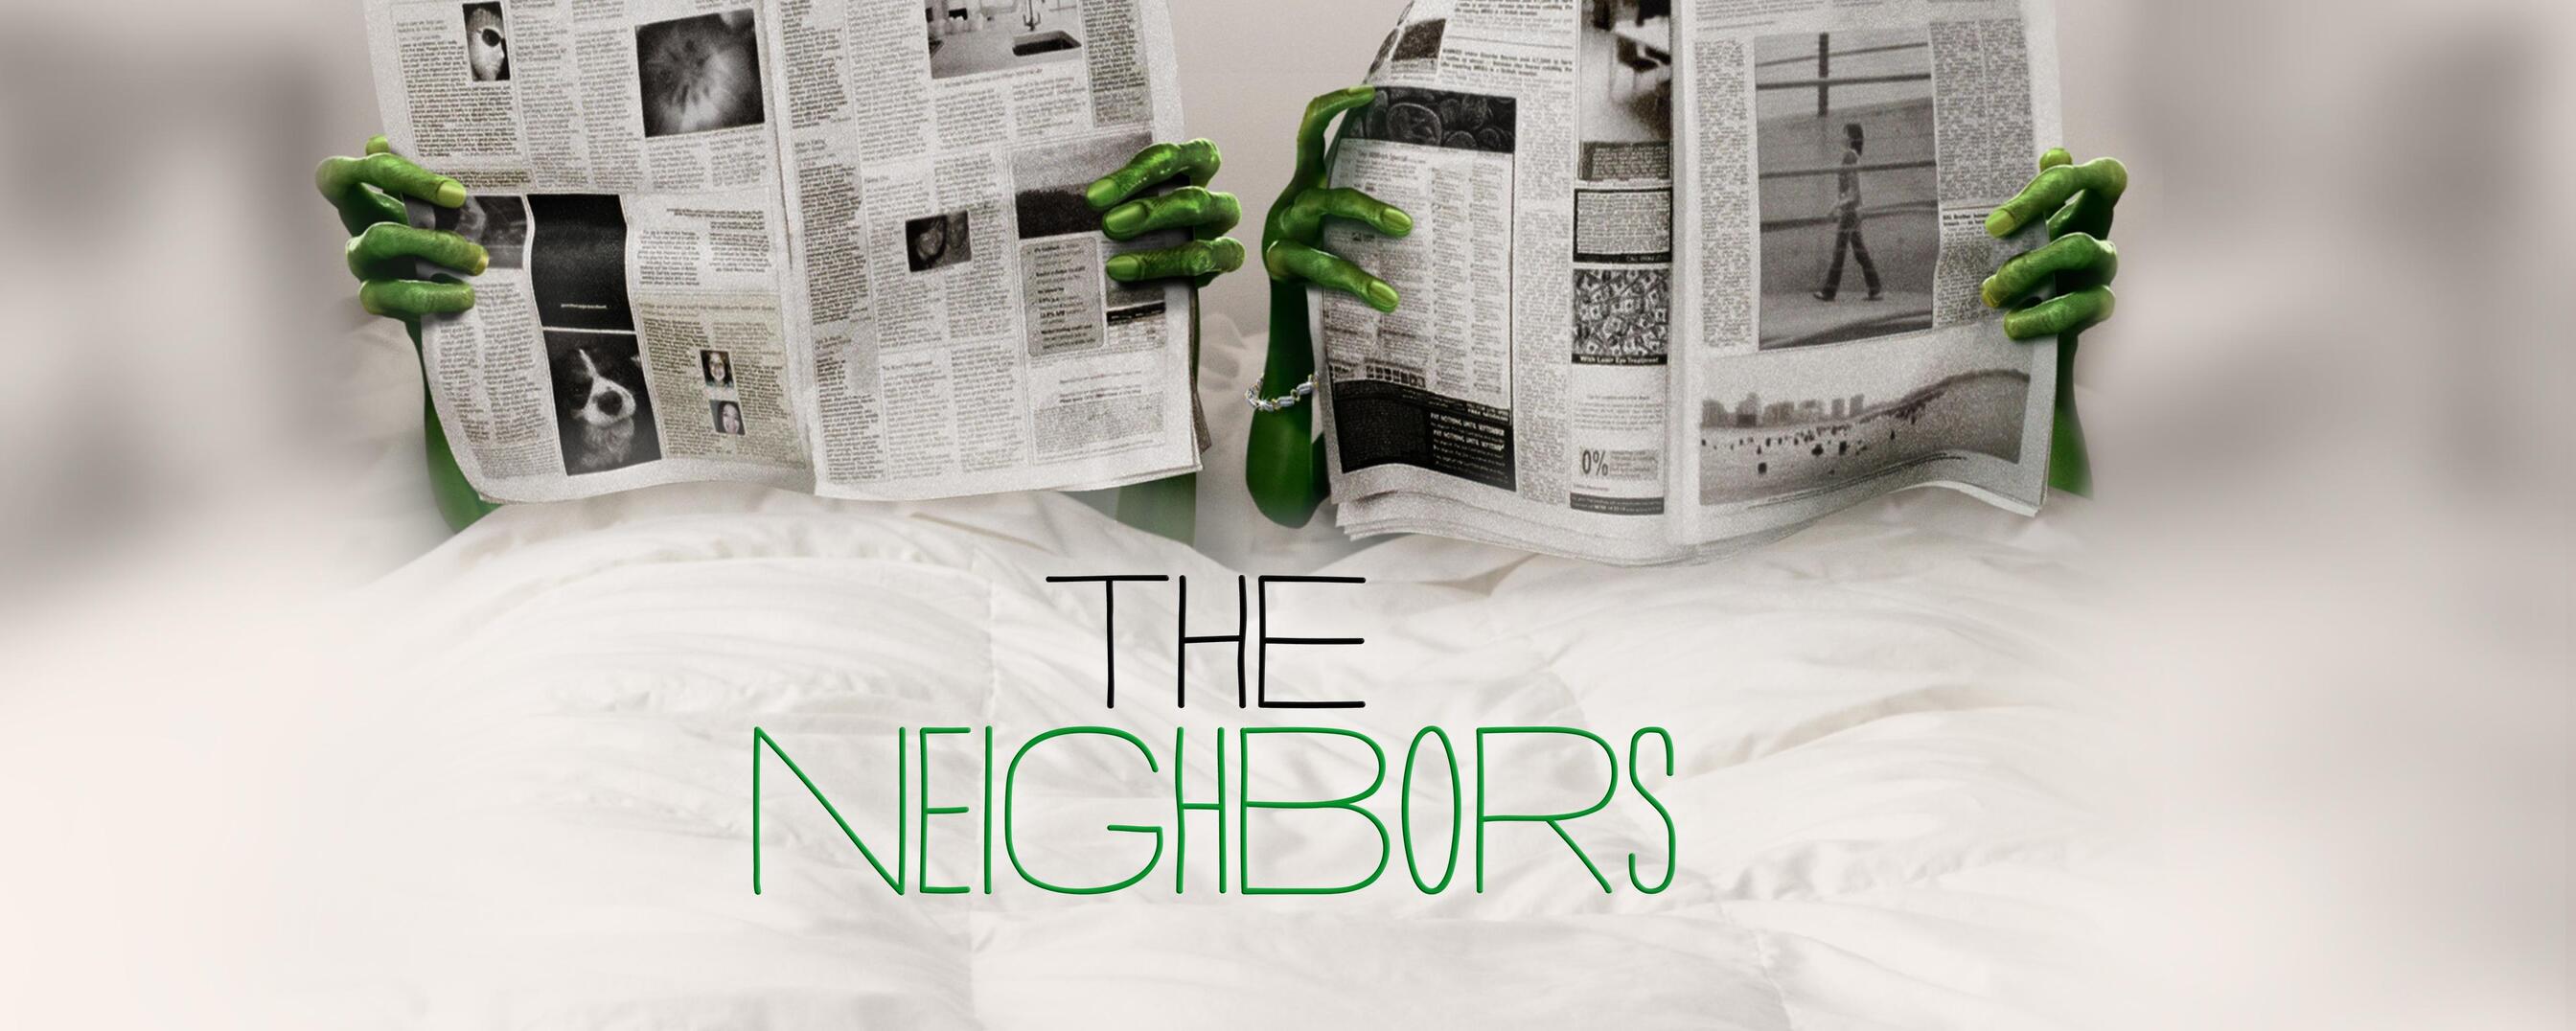 Neighbors Full Movie Online Free